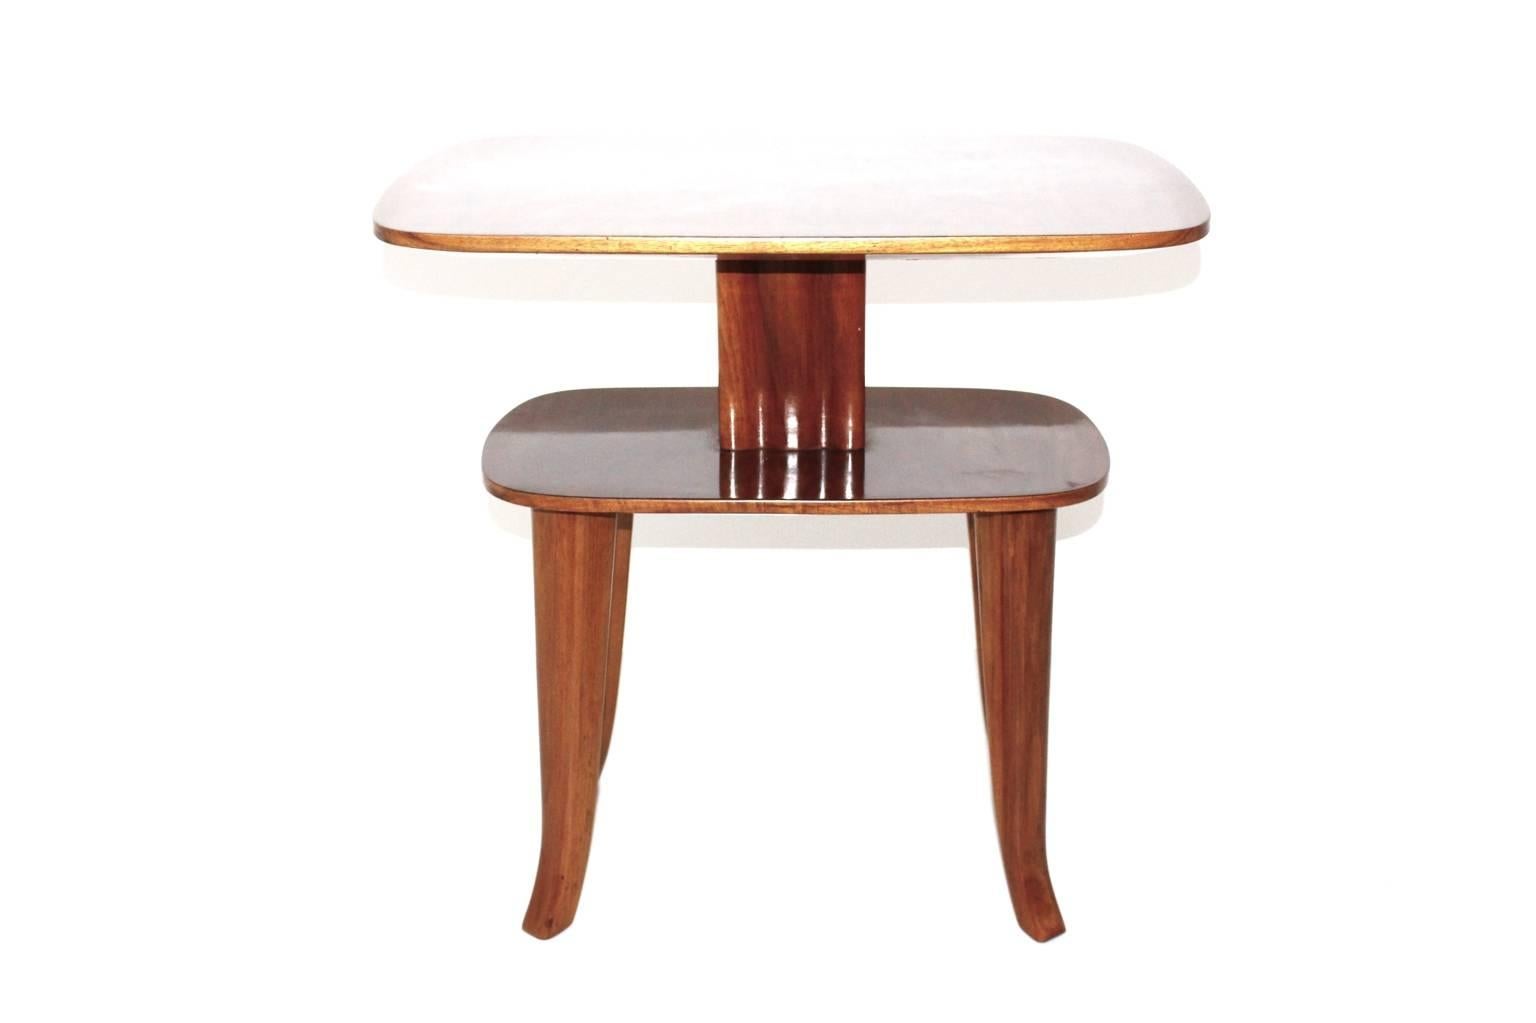 Polished Art Deco Vintage Walnut Side Table Coffee Table Style Josef Frank c 1925 Austria